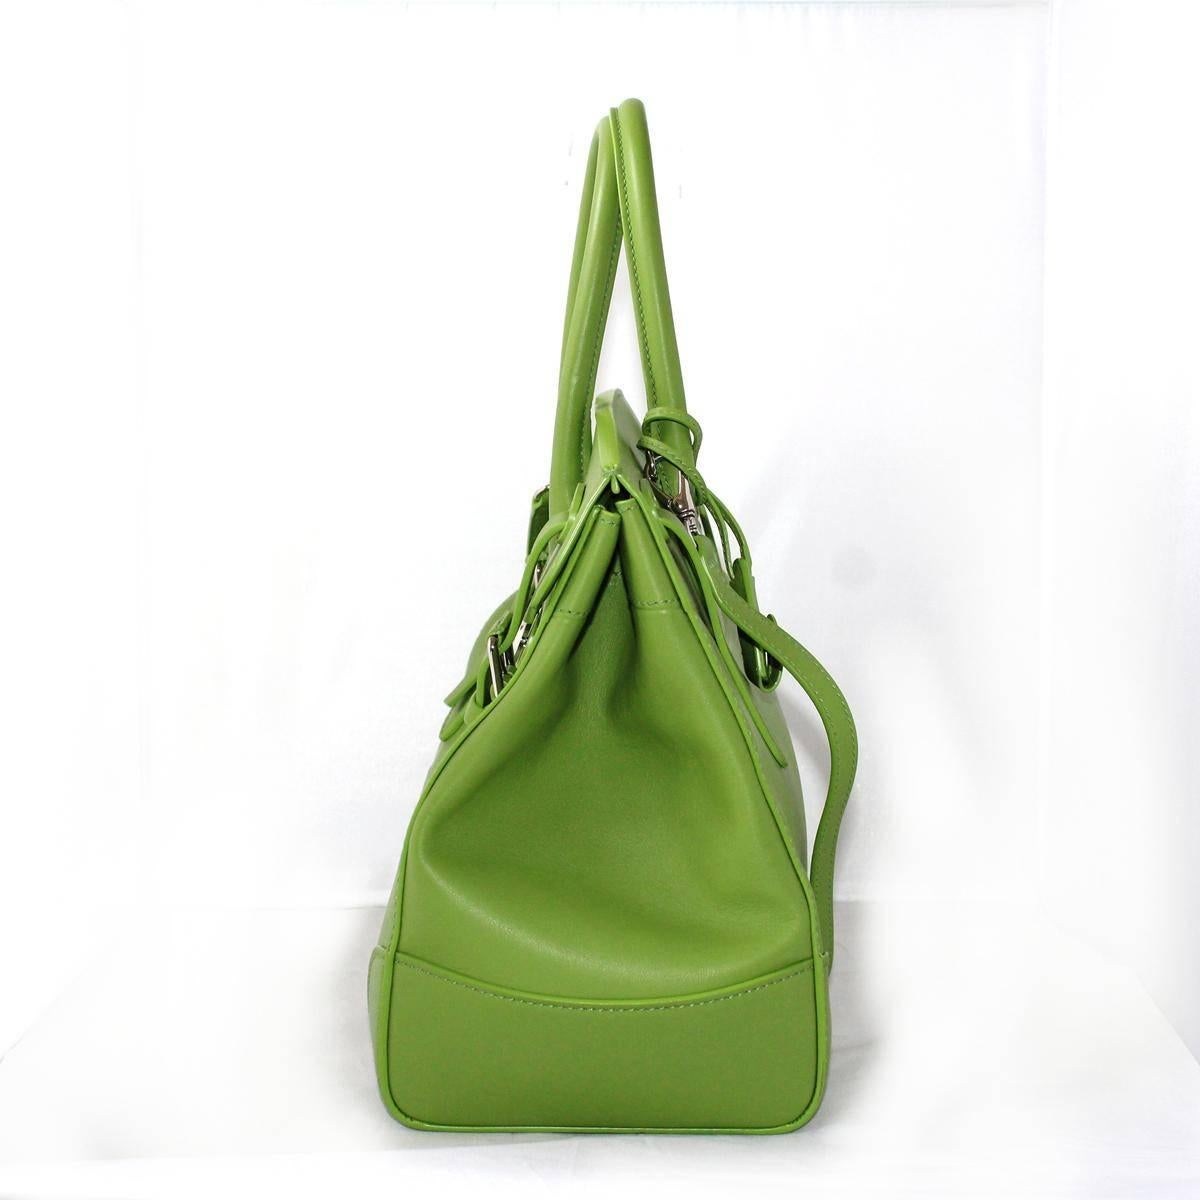 Marvellous and very chic Ralph Lauren bag
